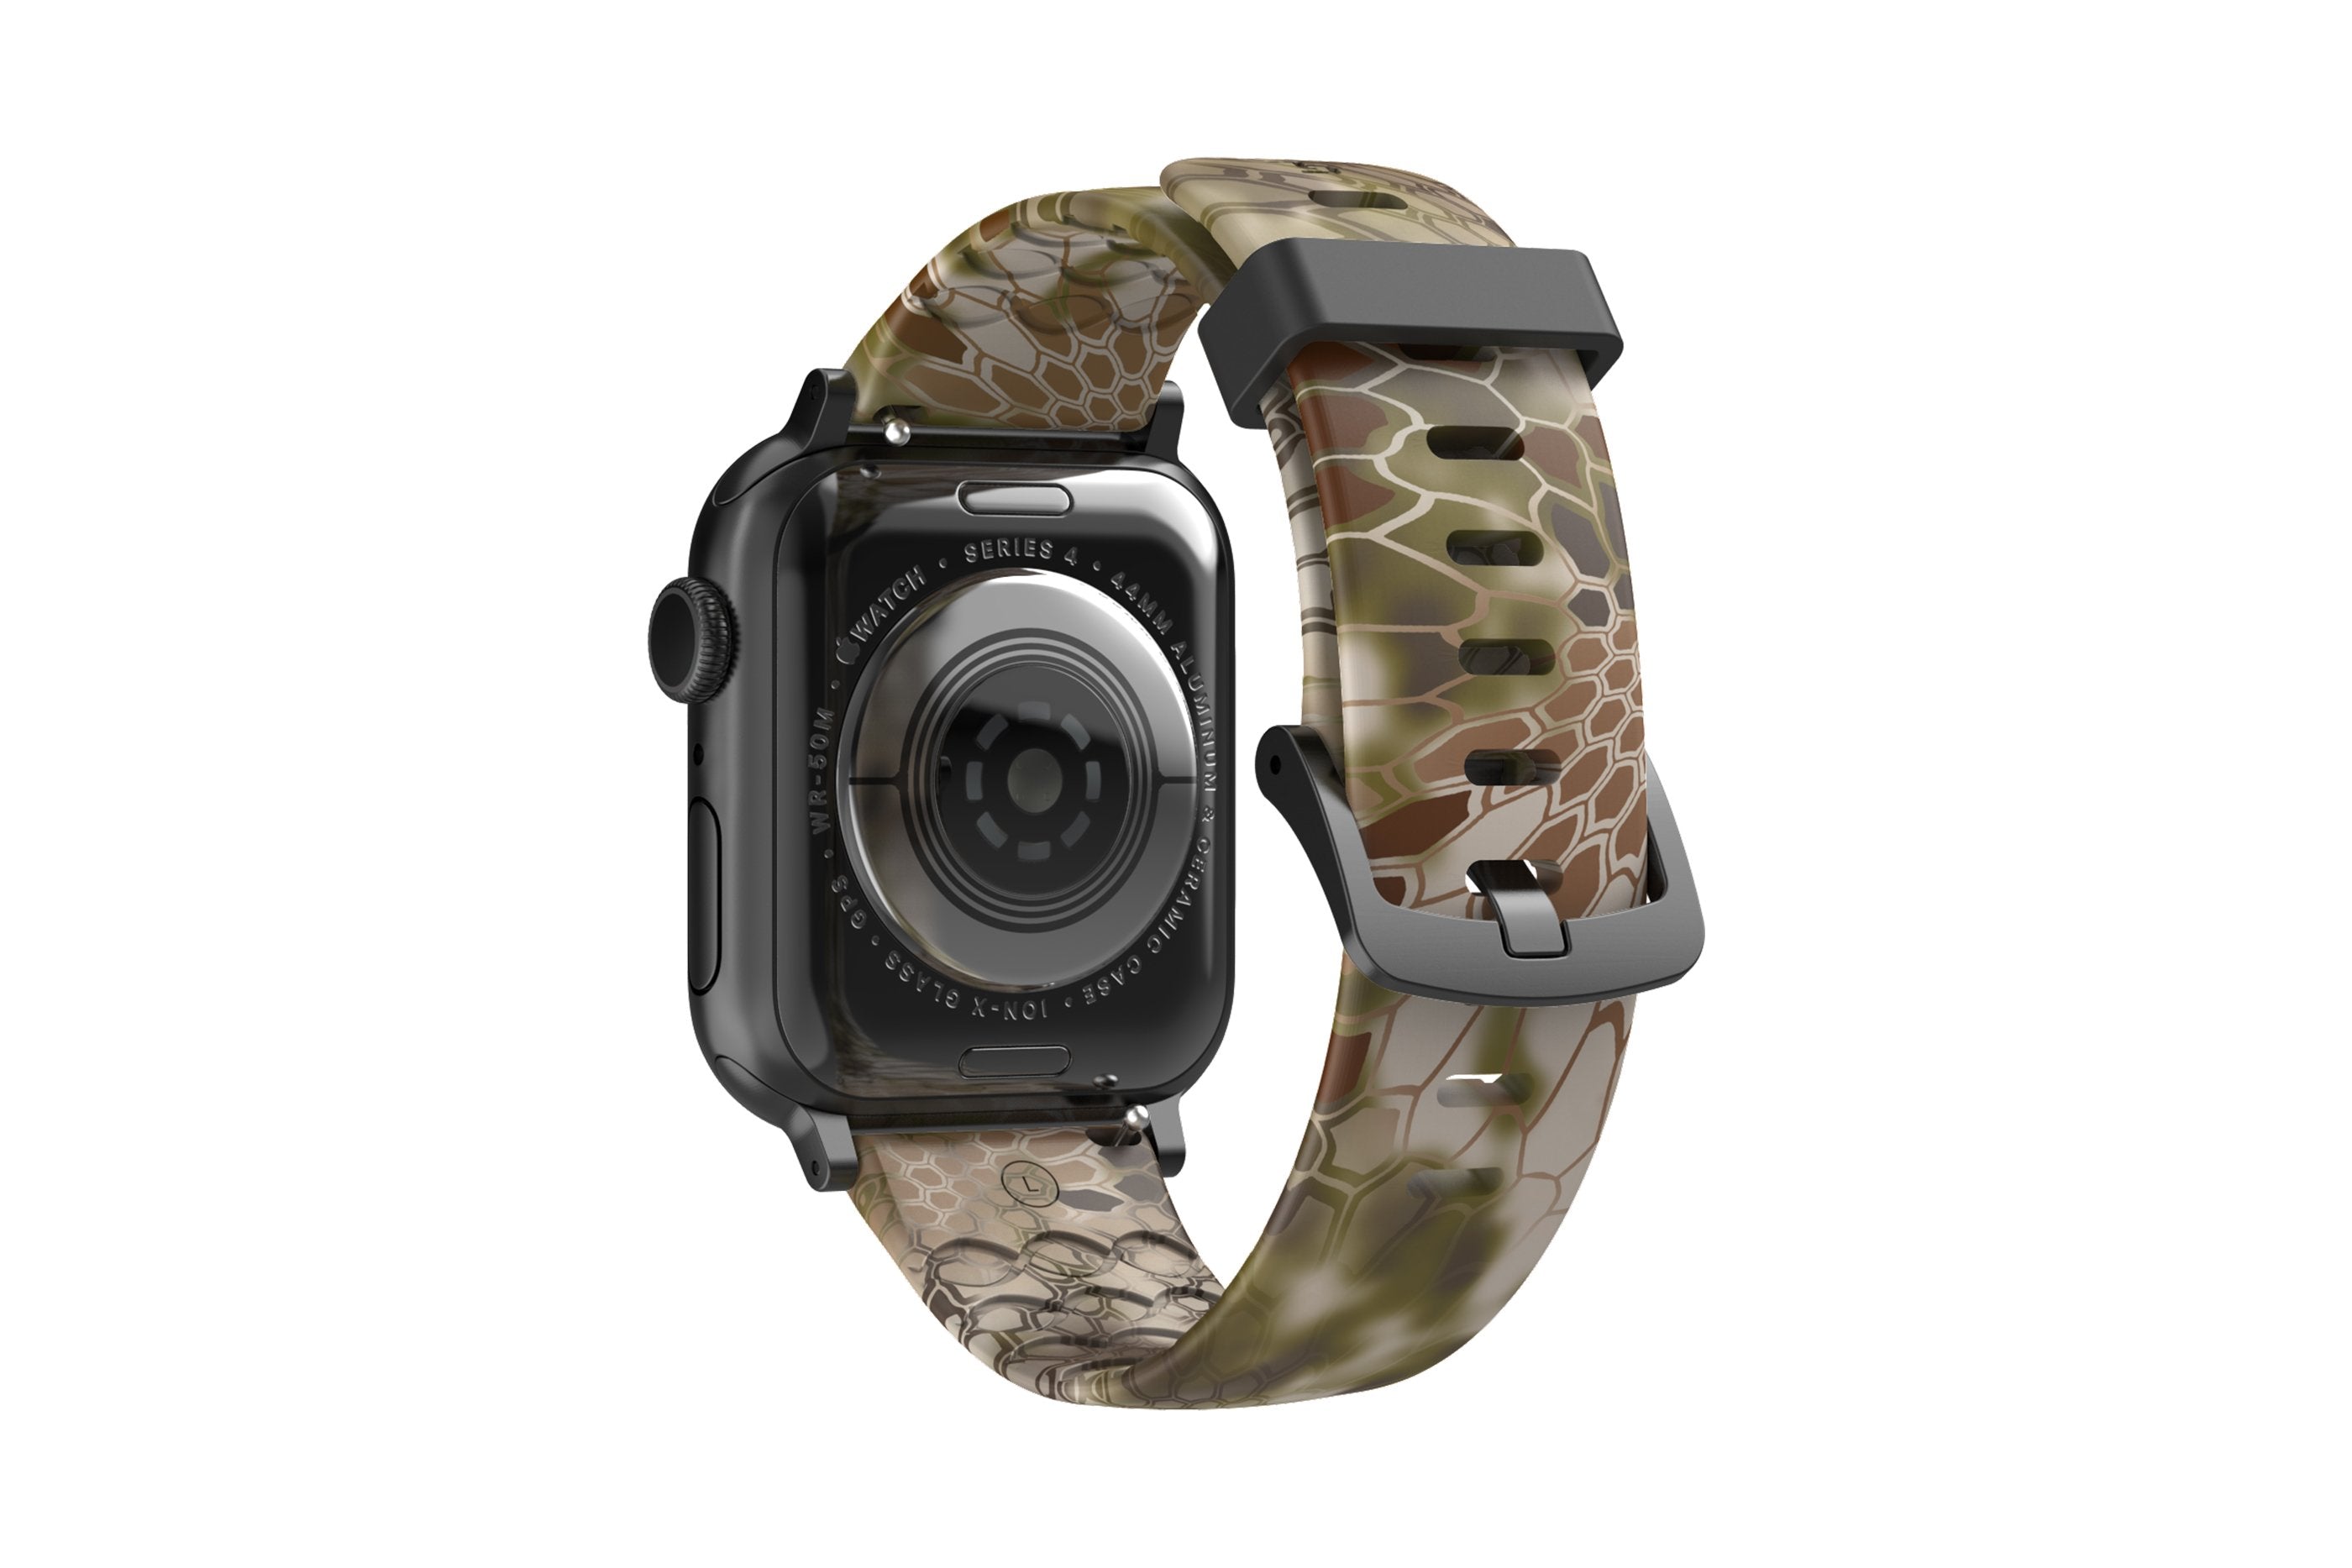 Kryptek Highlander Apple Watch Band with gray hardware viewed from rear